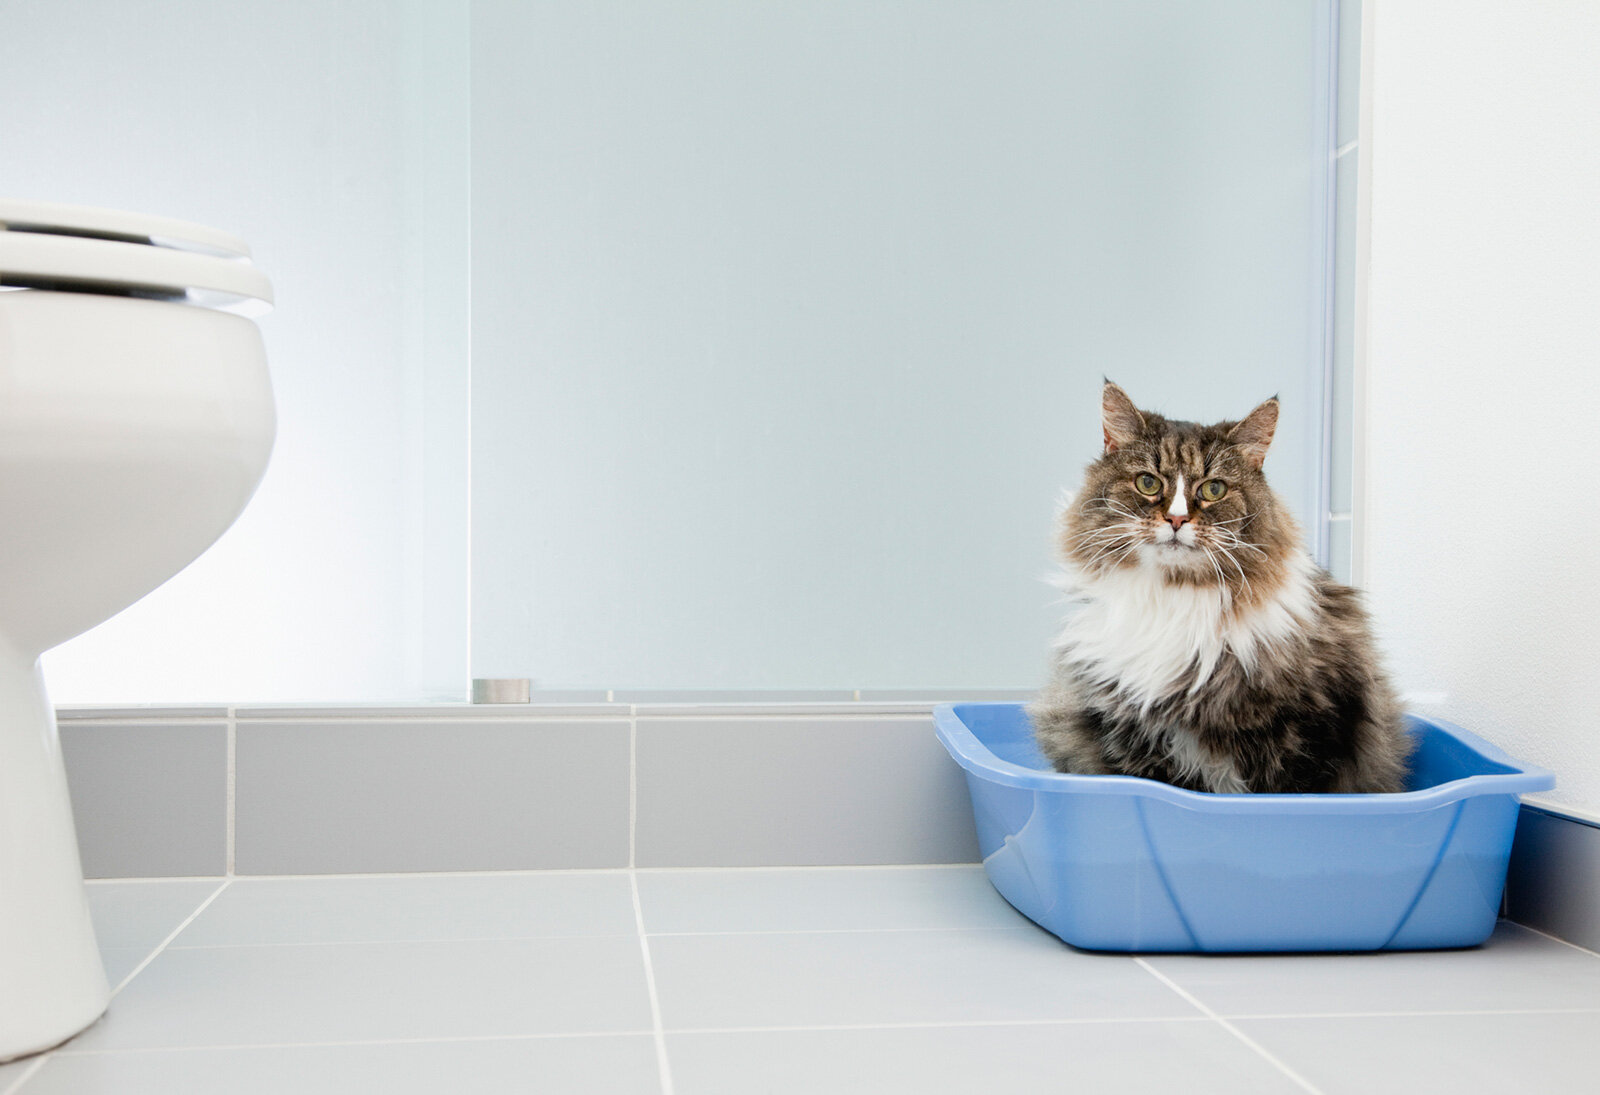 banyoda tuvaletini kullanan kedi